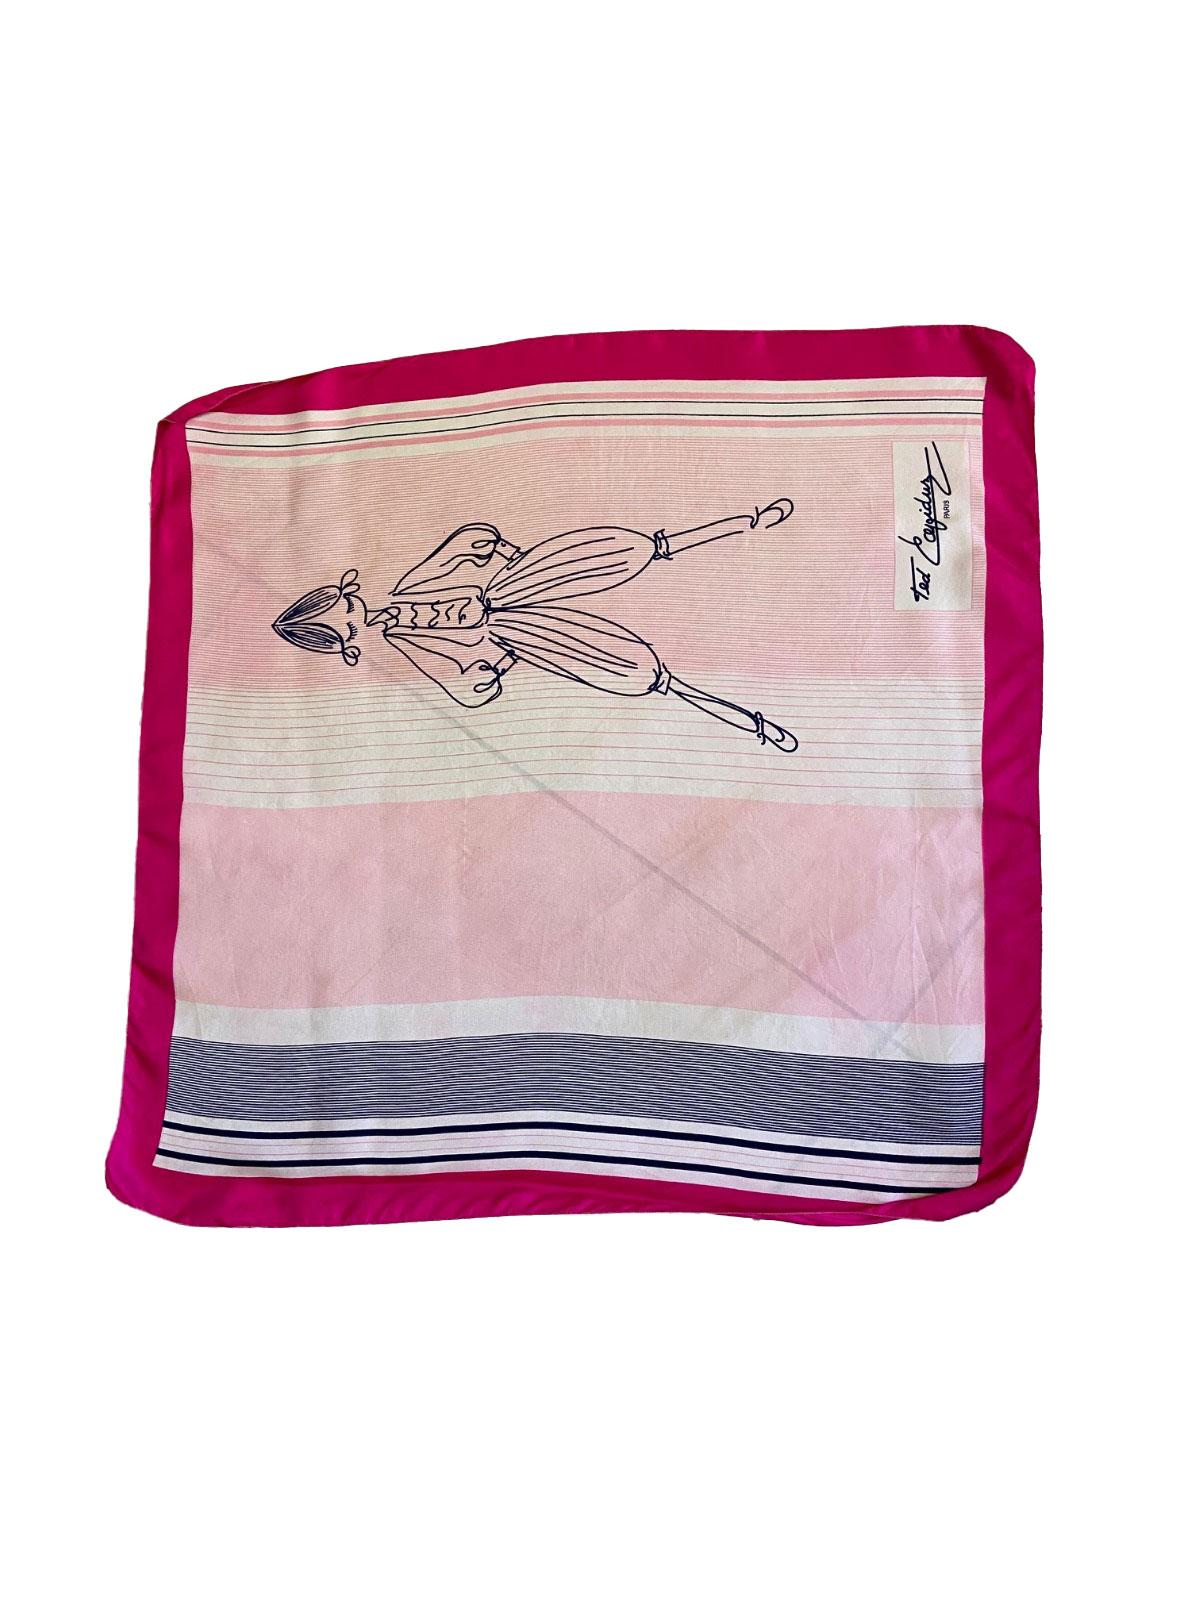 Foulard-foulard vintage-foulard rétro-foulard style peynet-foulard Ted Lapidus- foulard rose- foulard de soie- scarf- vintage scarf- retro scarf- Ted Lapidus scarf- peynet-style scarf - pink scarf- silk scarf